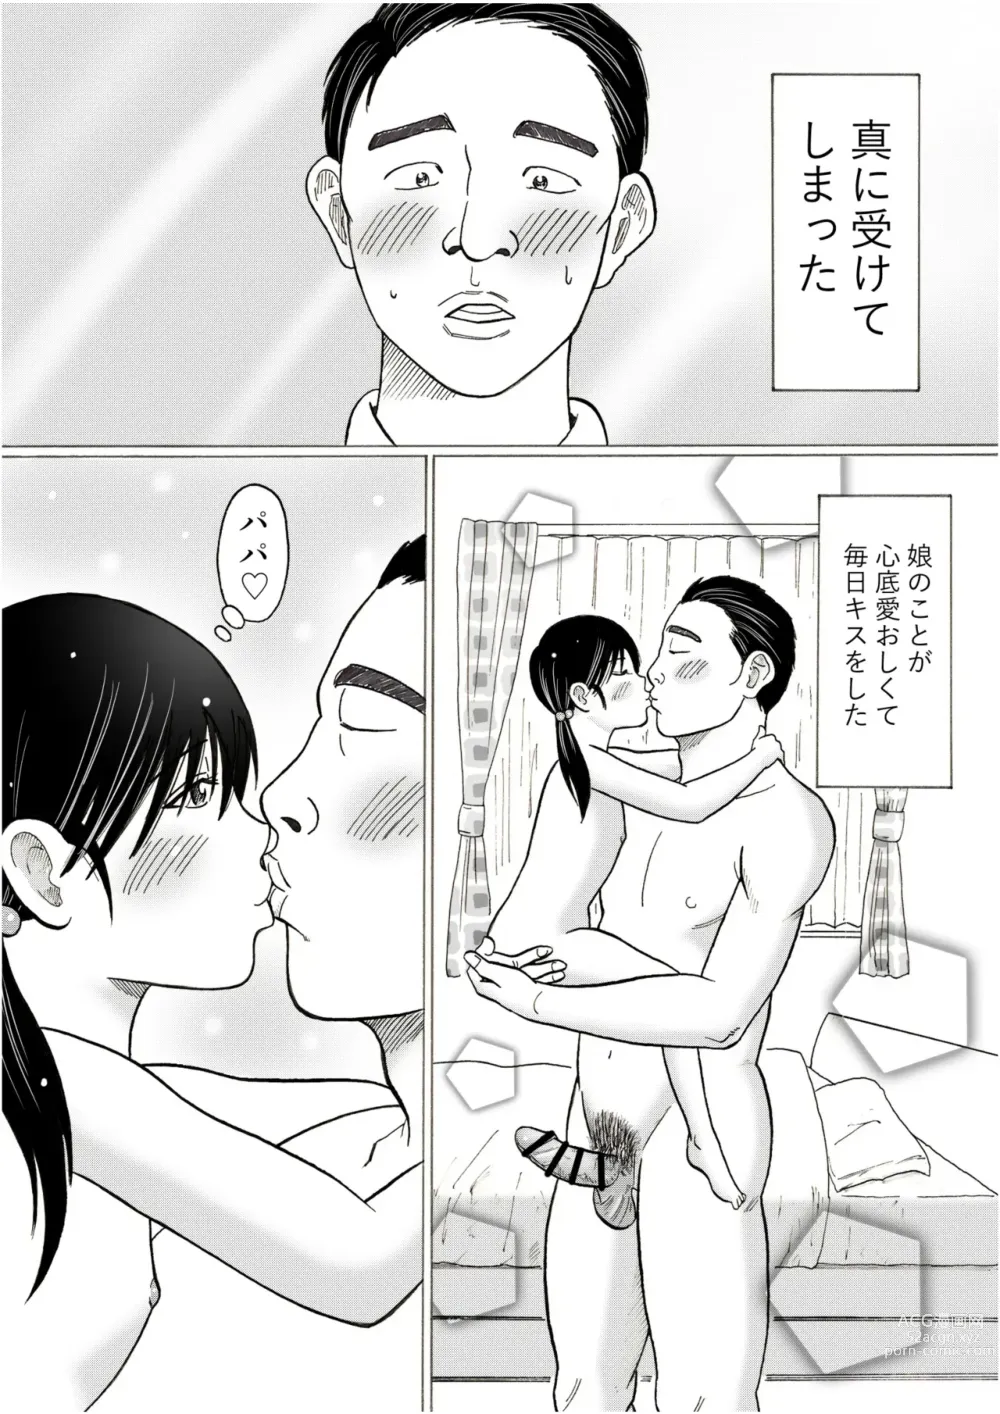 Page 4 of doujinshi Risato